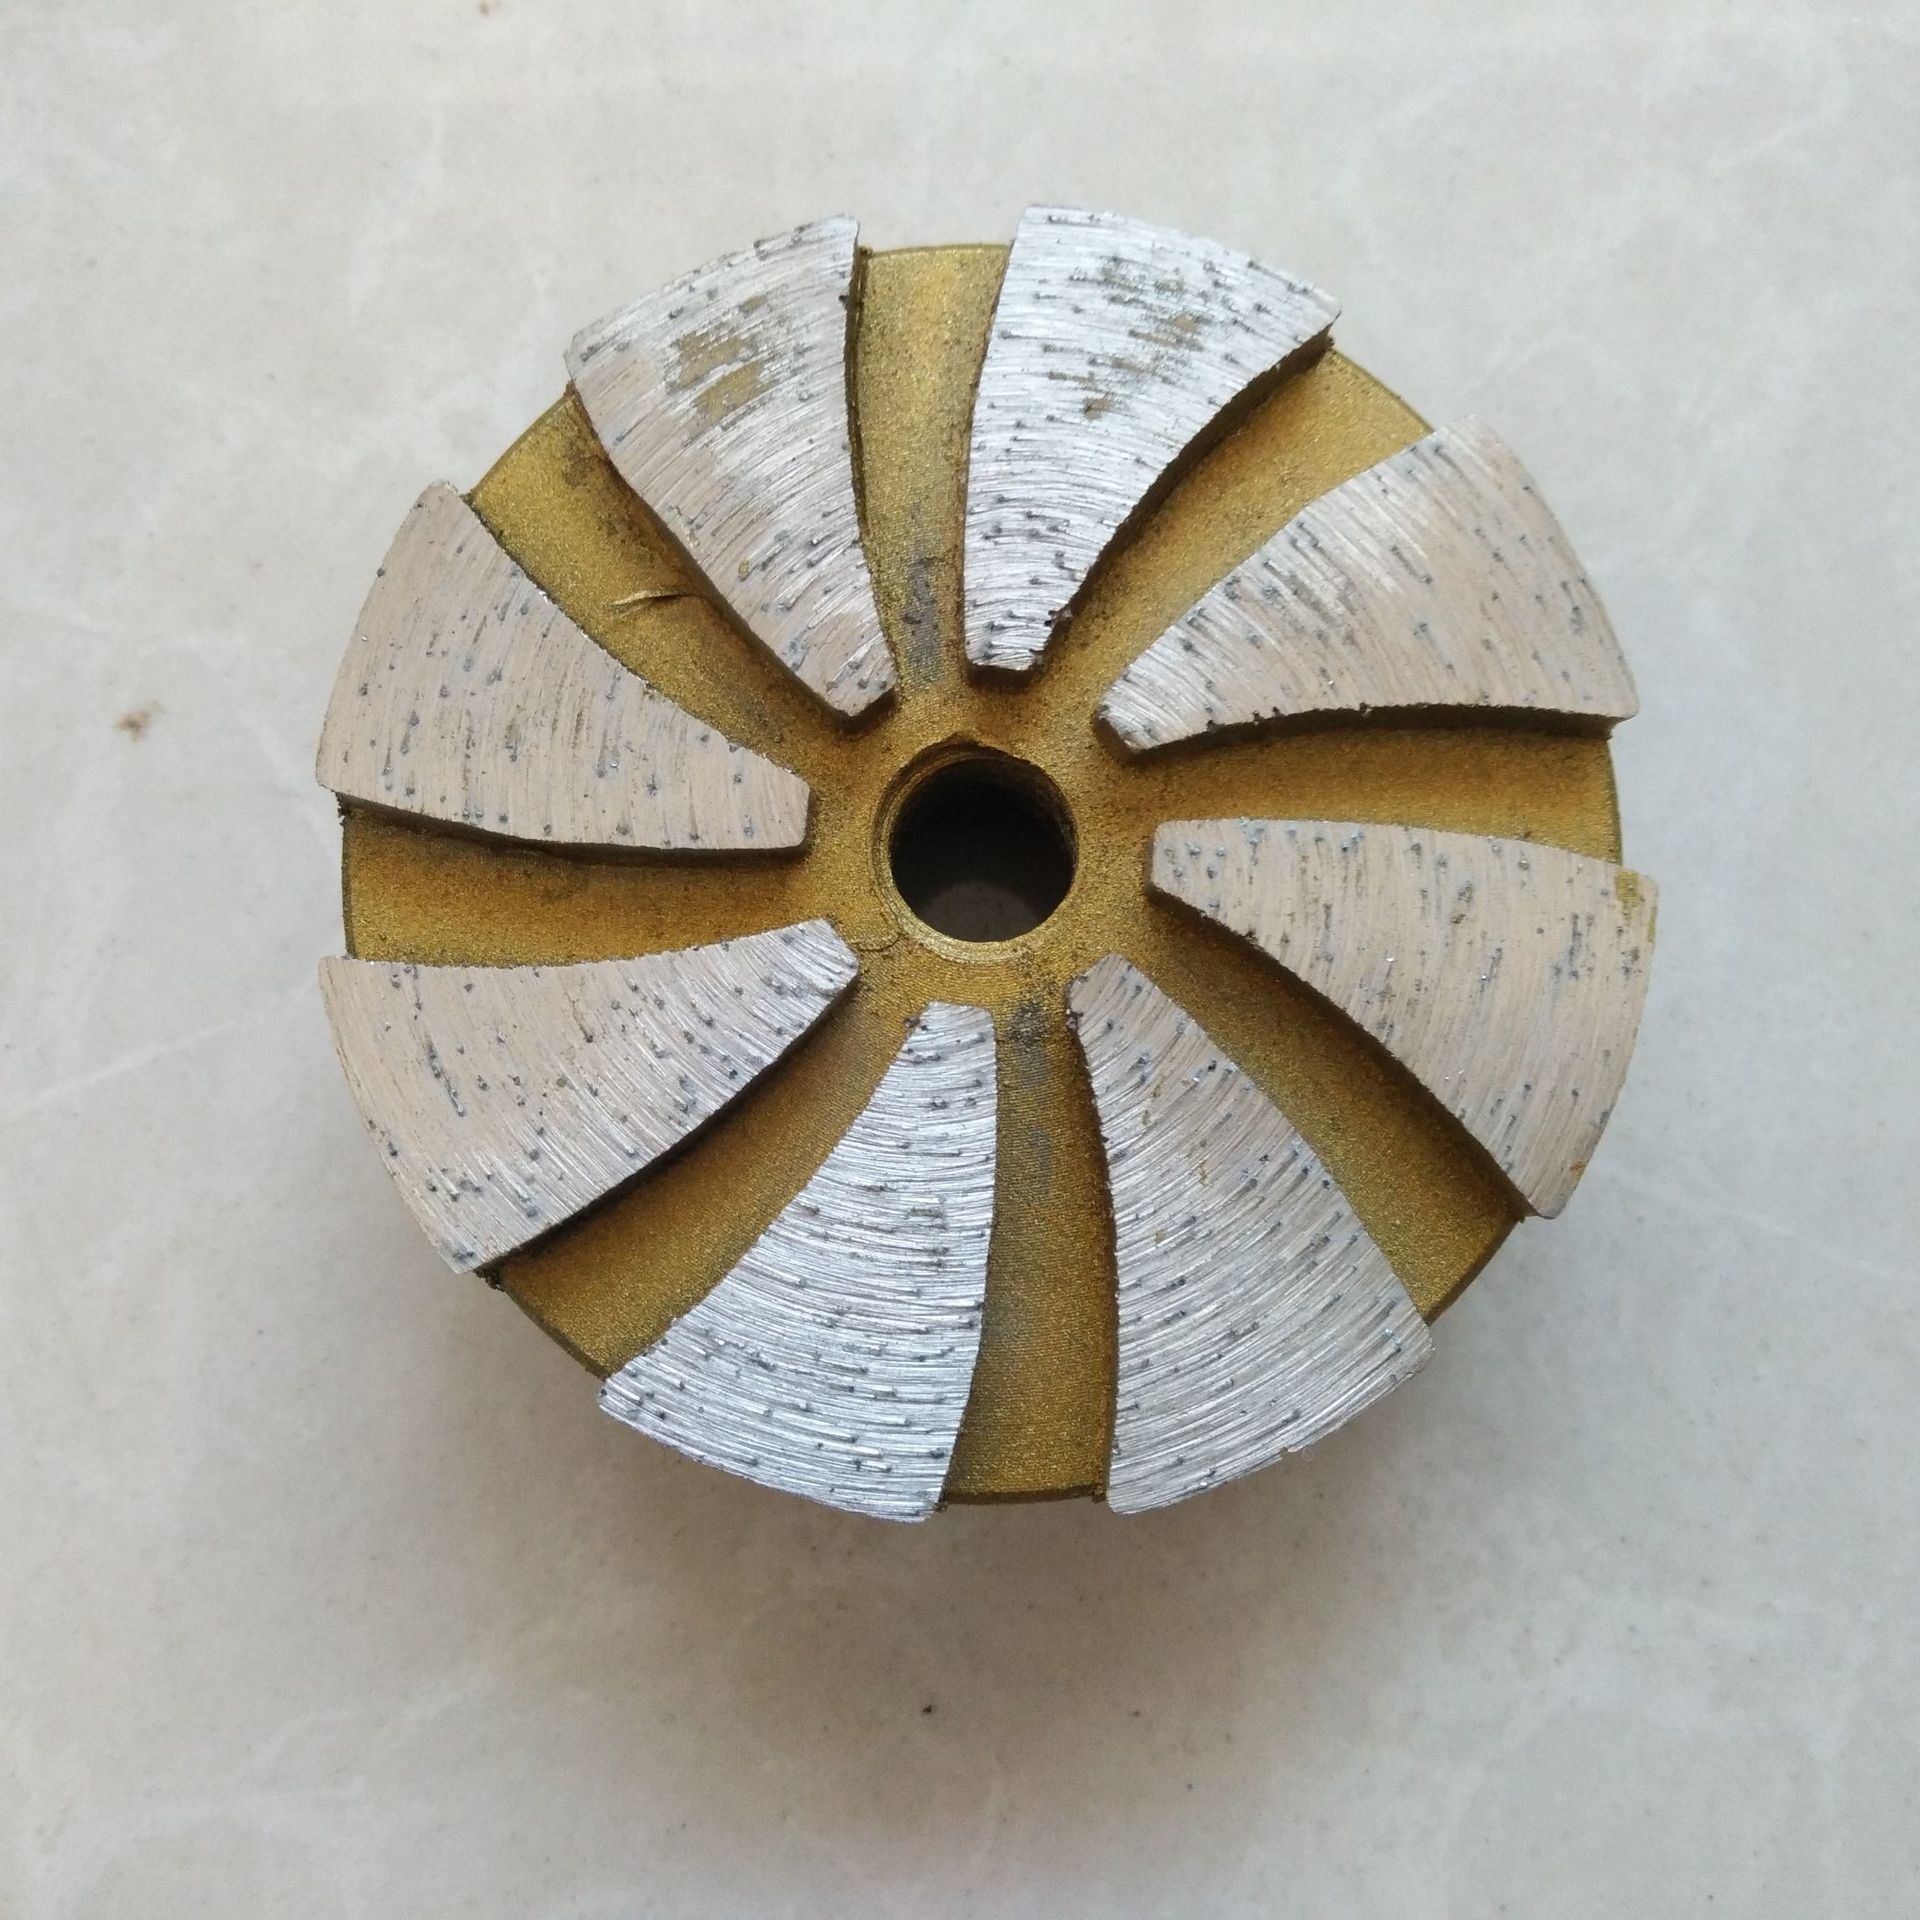 Twisted Segments Drum Diamond Grinding Wheel for Stone (SED-DGW-TS)